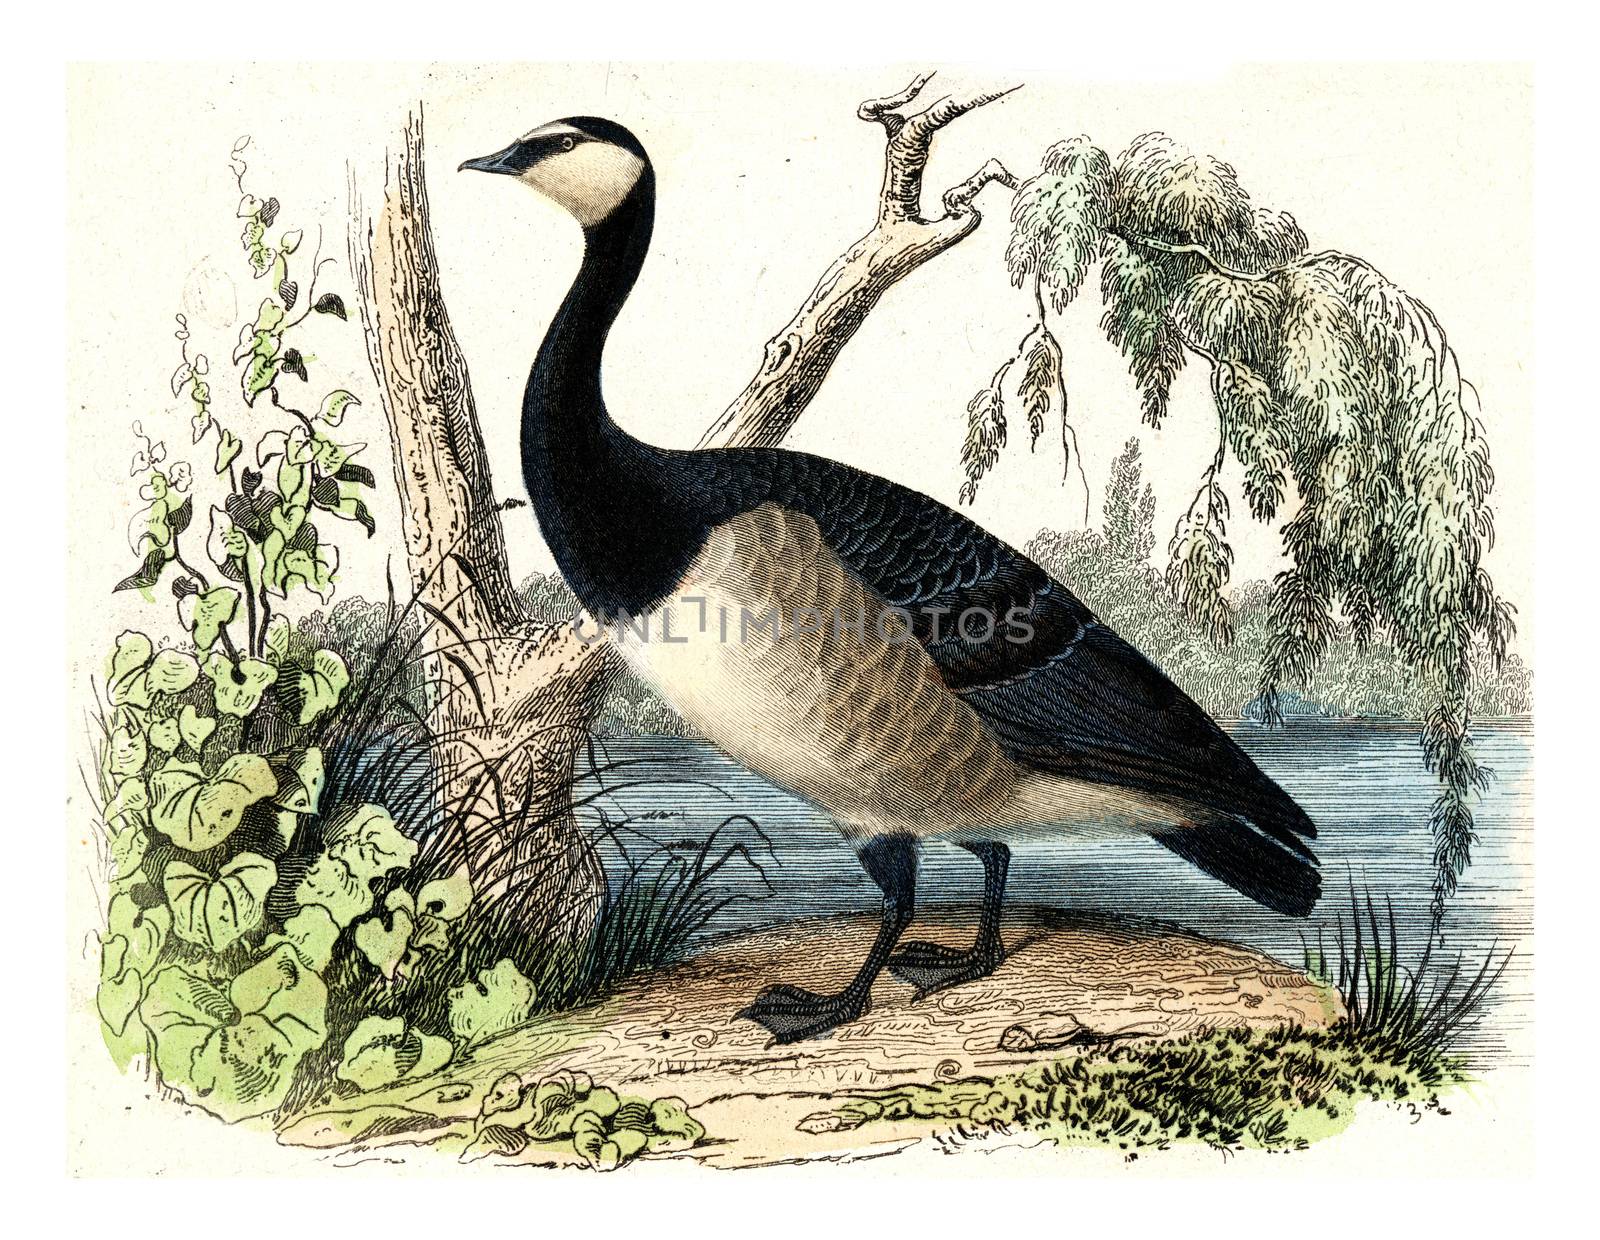 Goose, vintage engraved illustration. From Buffon Complete Work.
